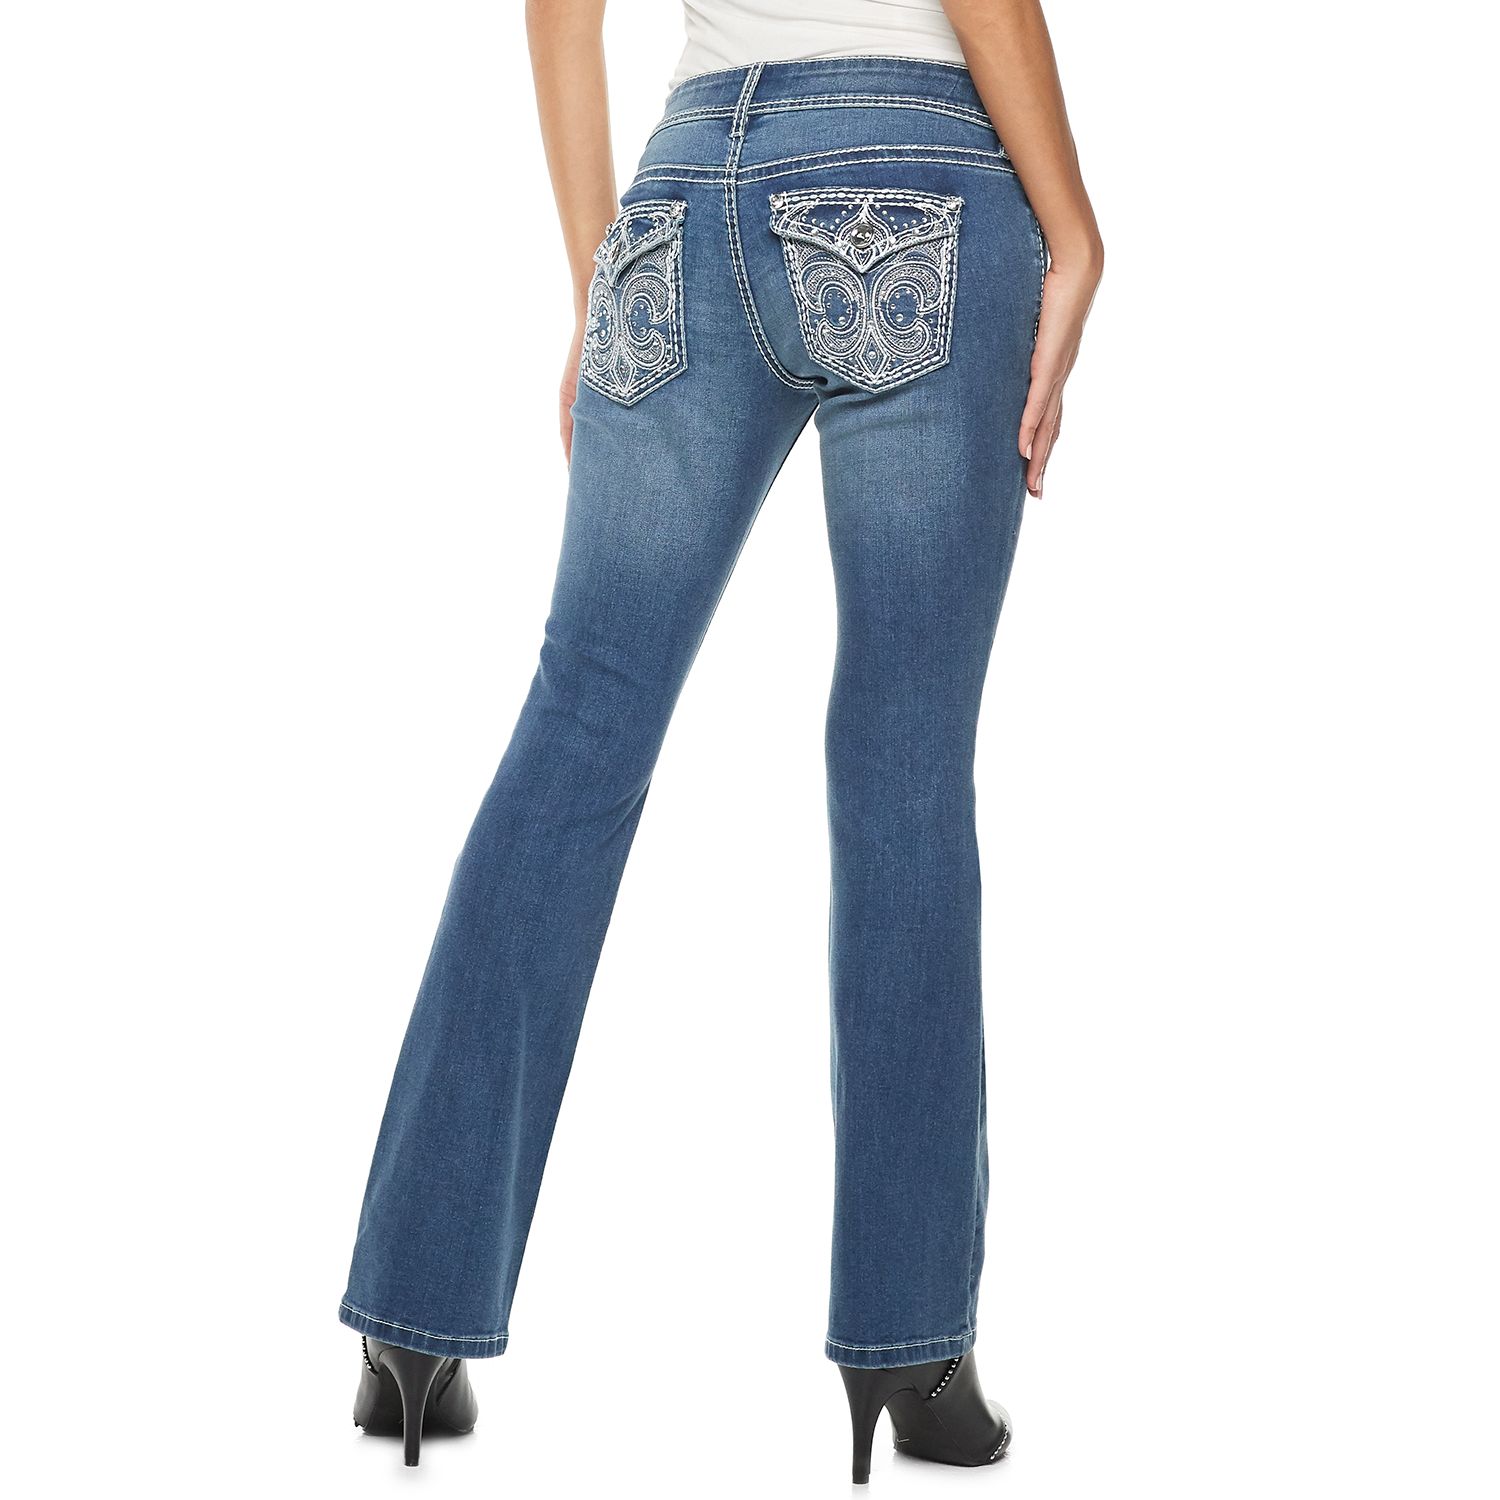 apt 9 jeans womens